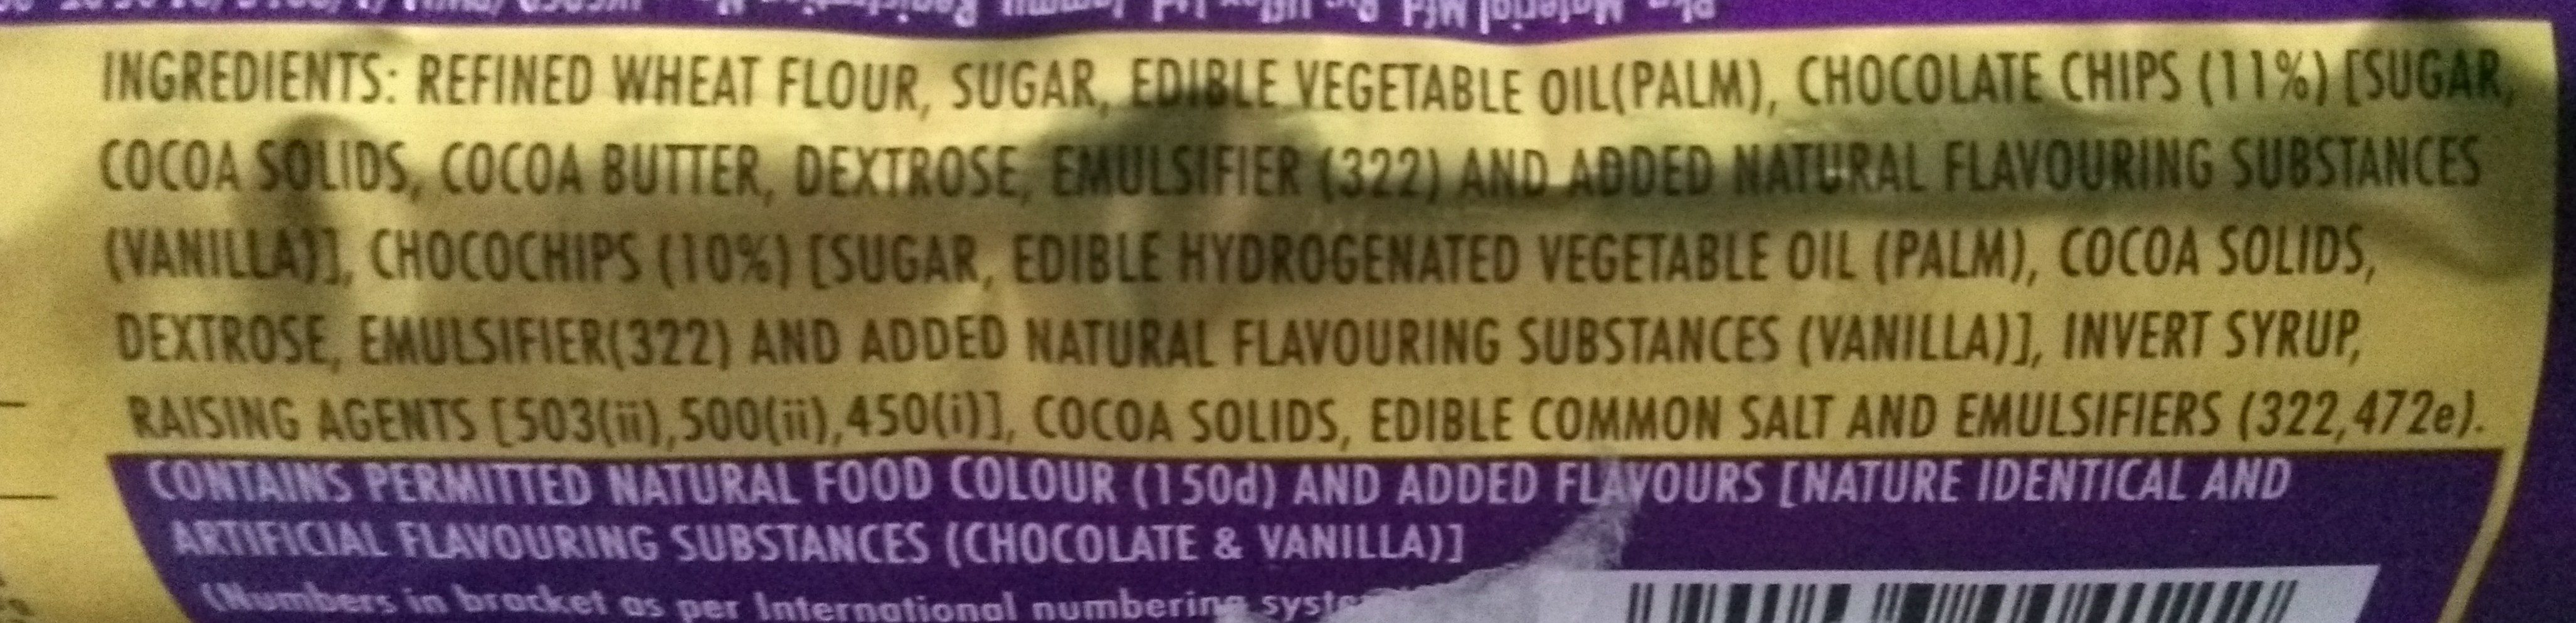 GoodDay Choco Chip - Ingredients